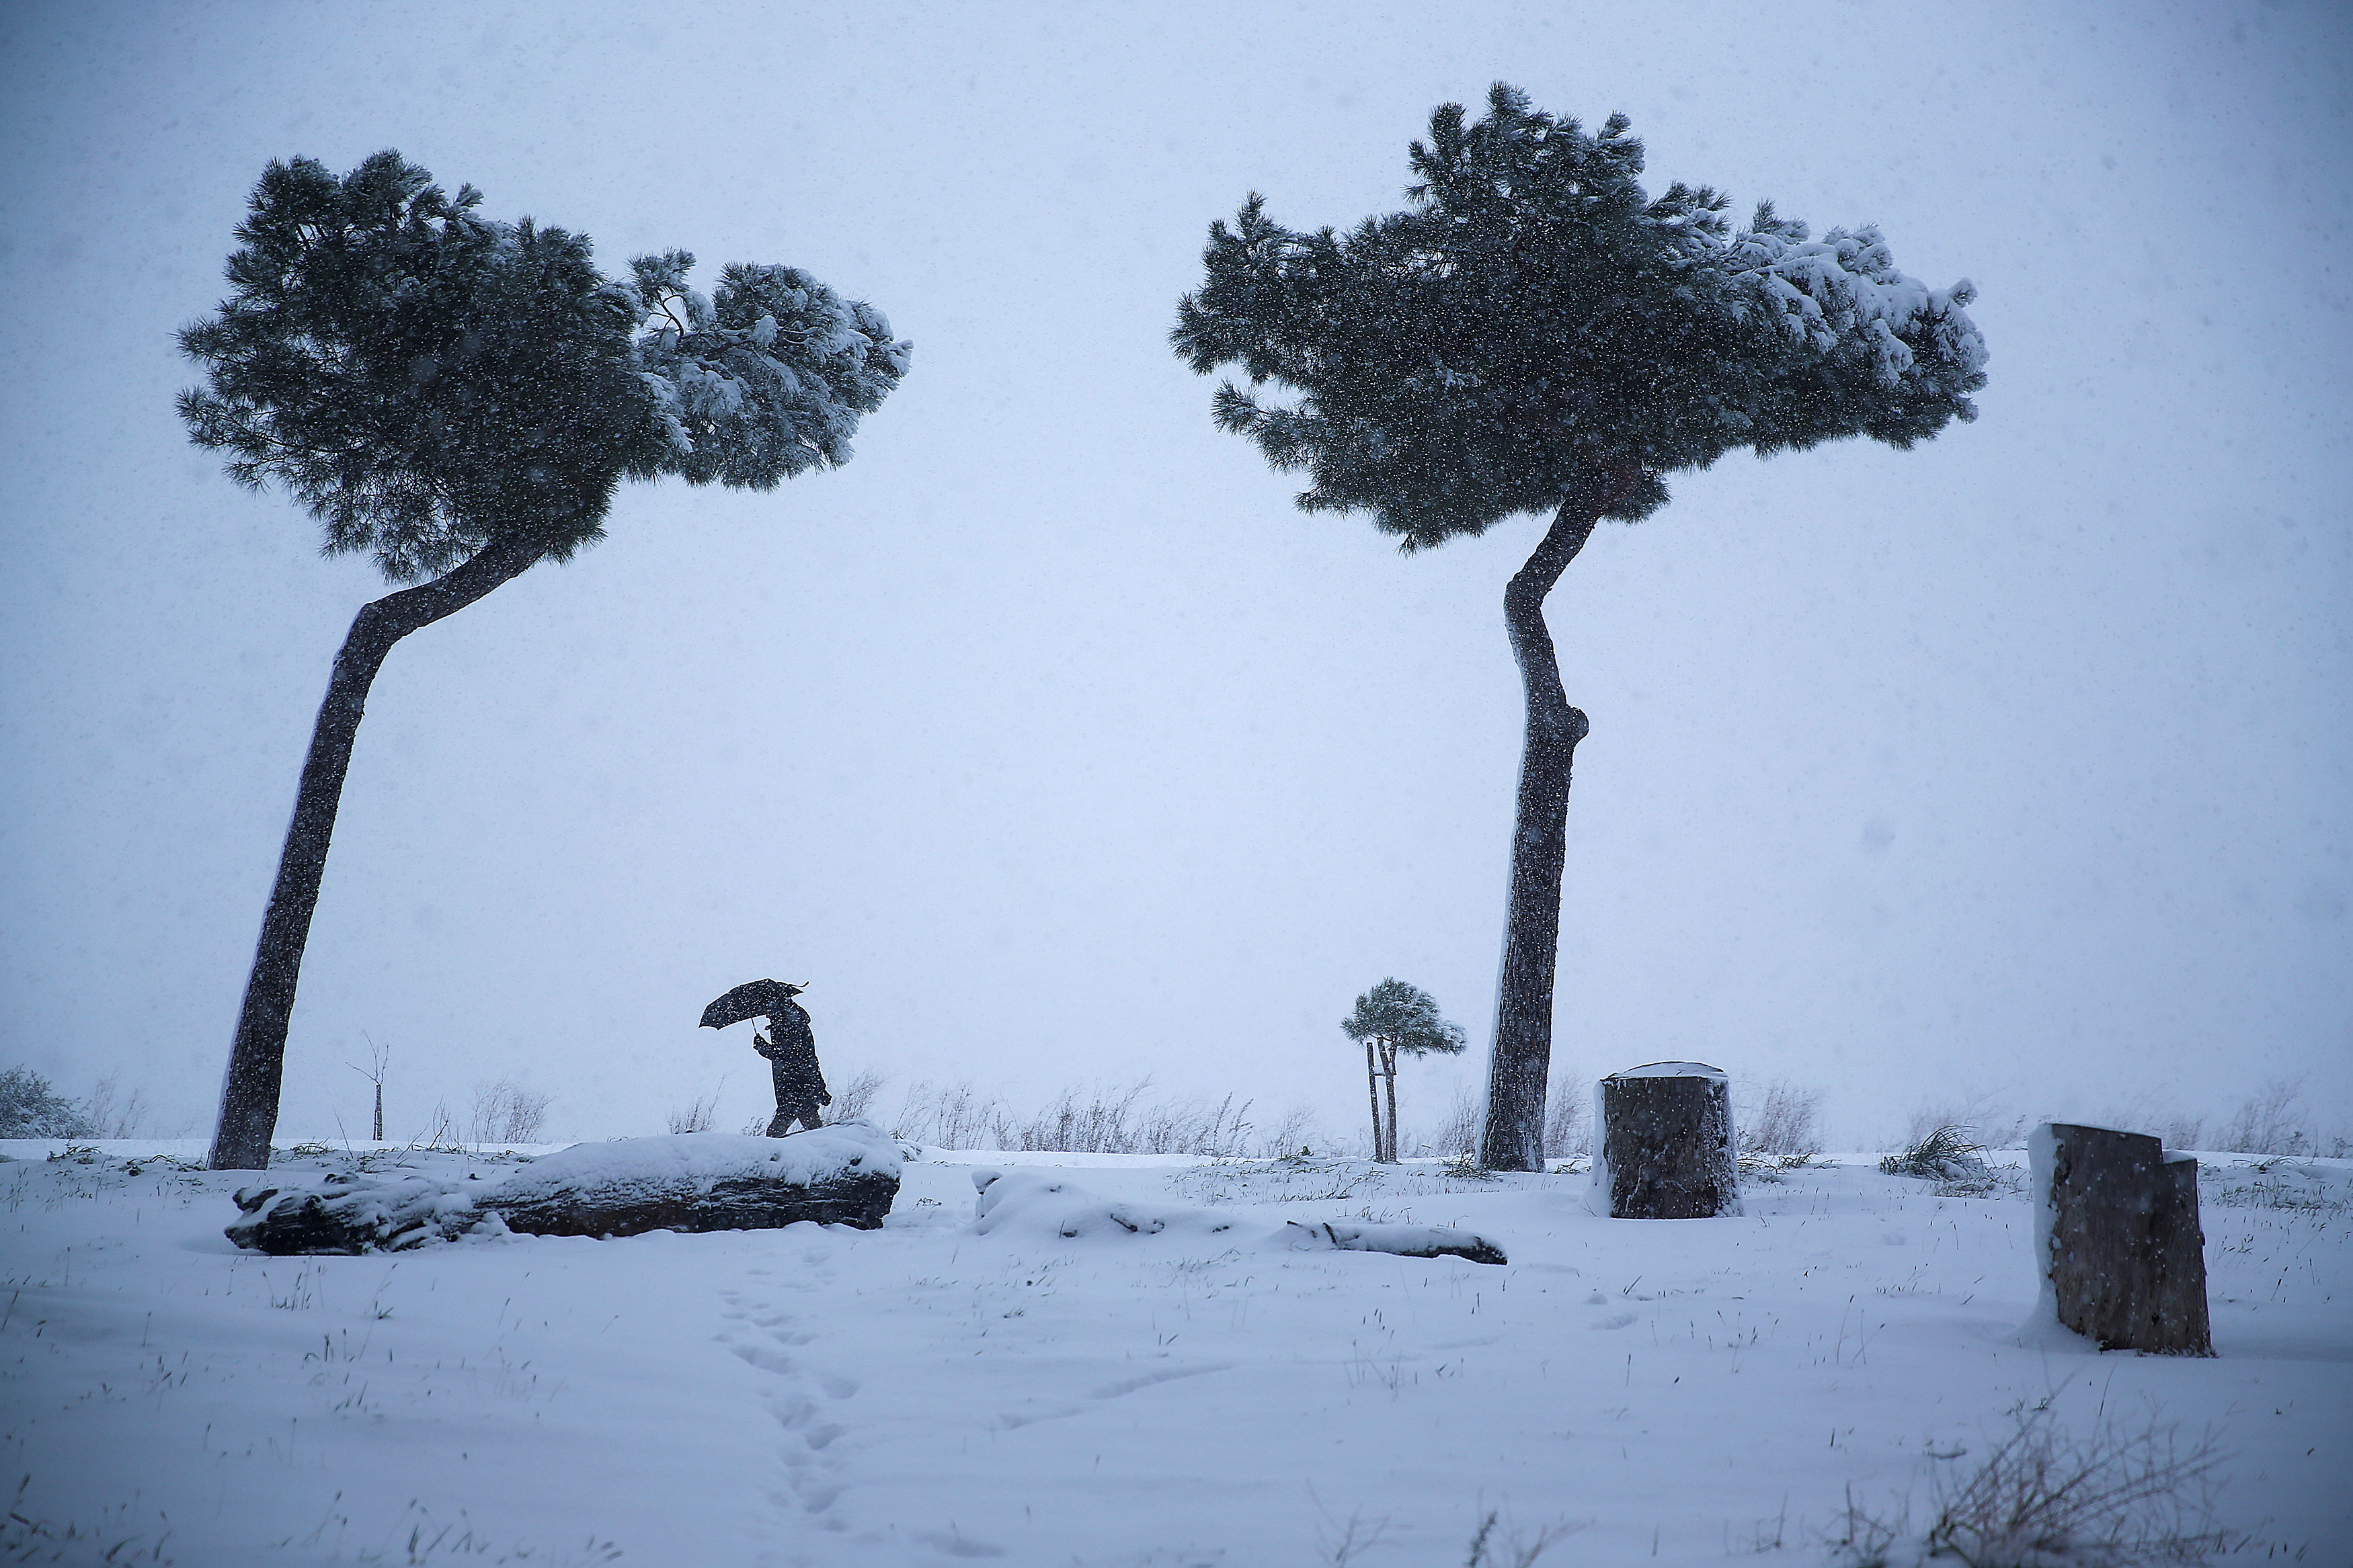 In pictures: Rare snow storm wreaks havoc in Rome